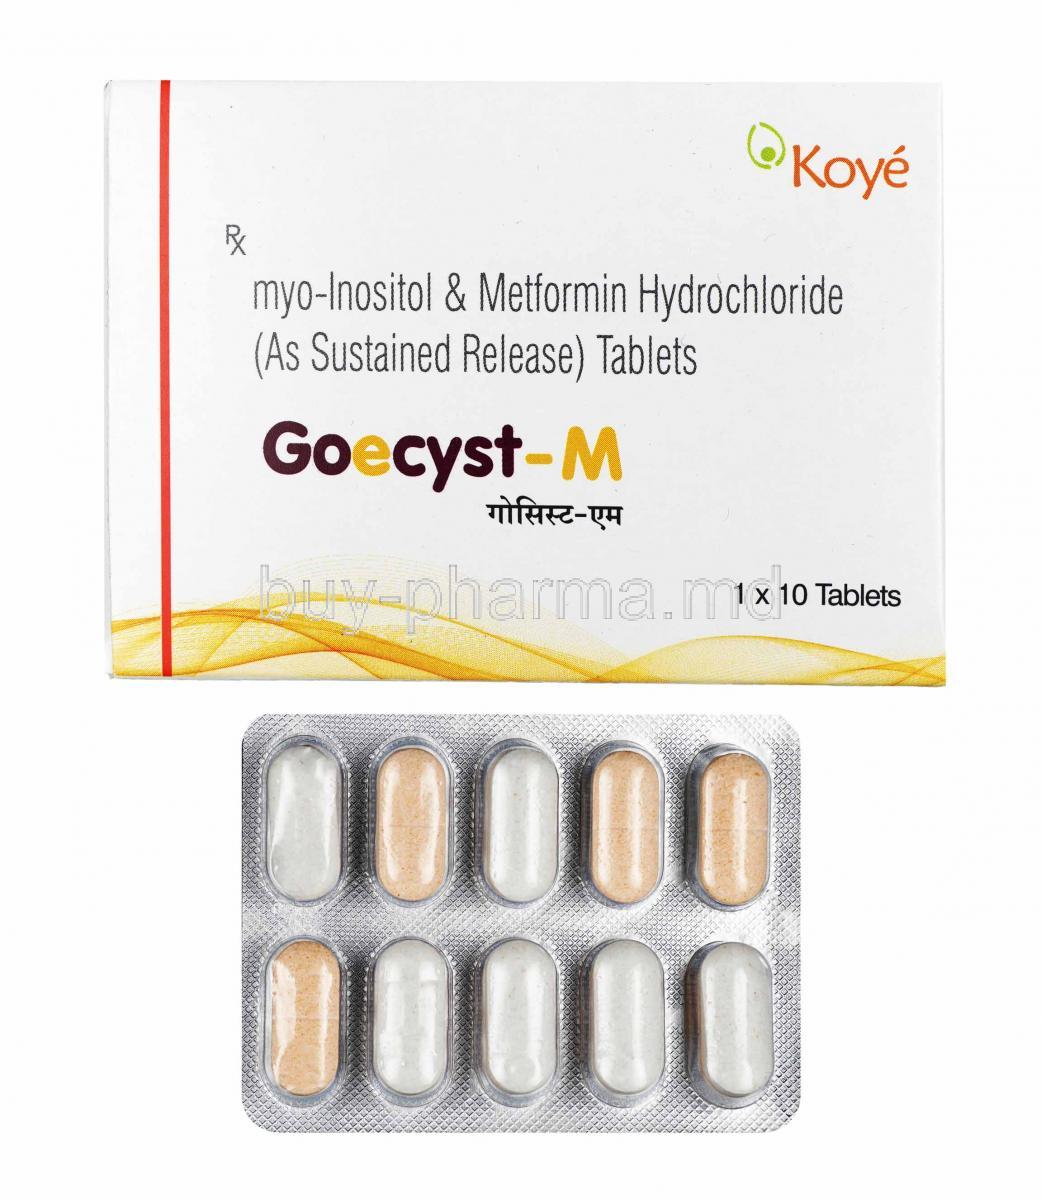 Goecyst-M, Myo-Inositol and Metformin Hydrochloride box and tablets